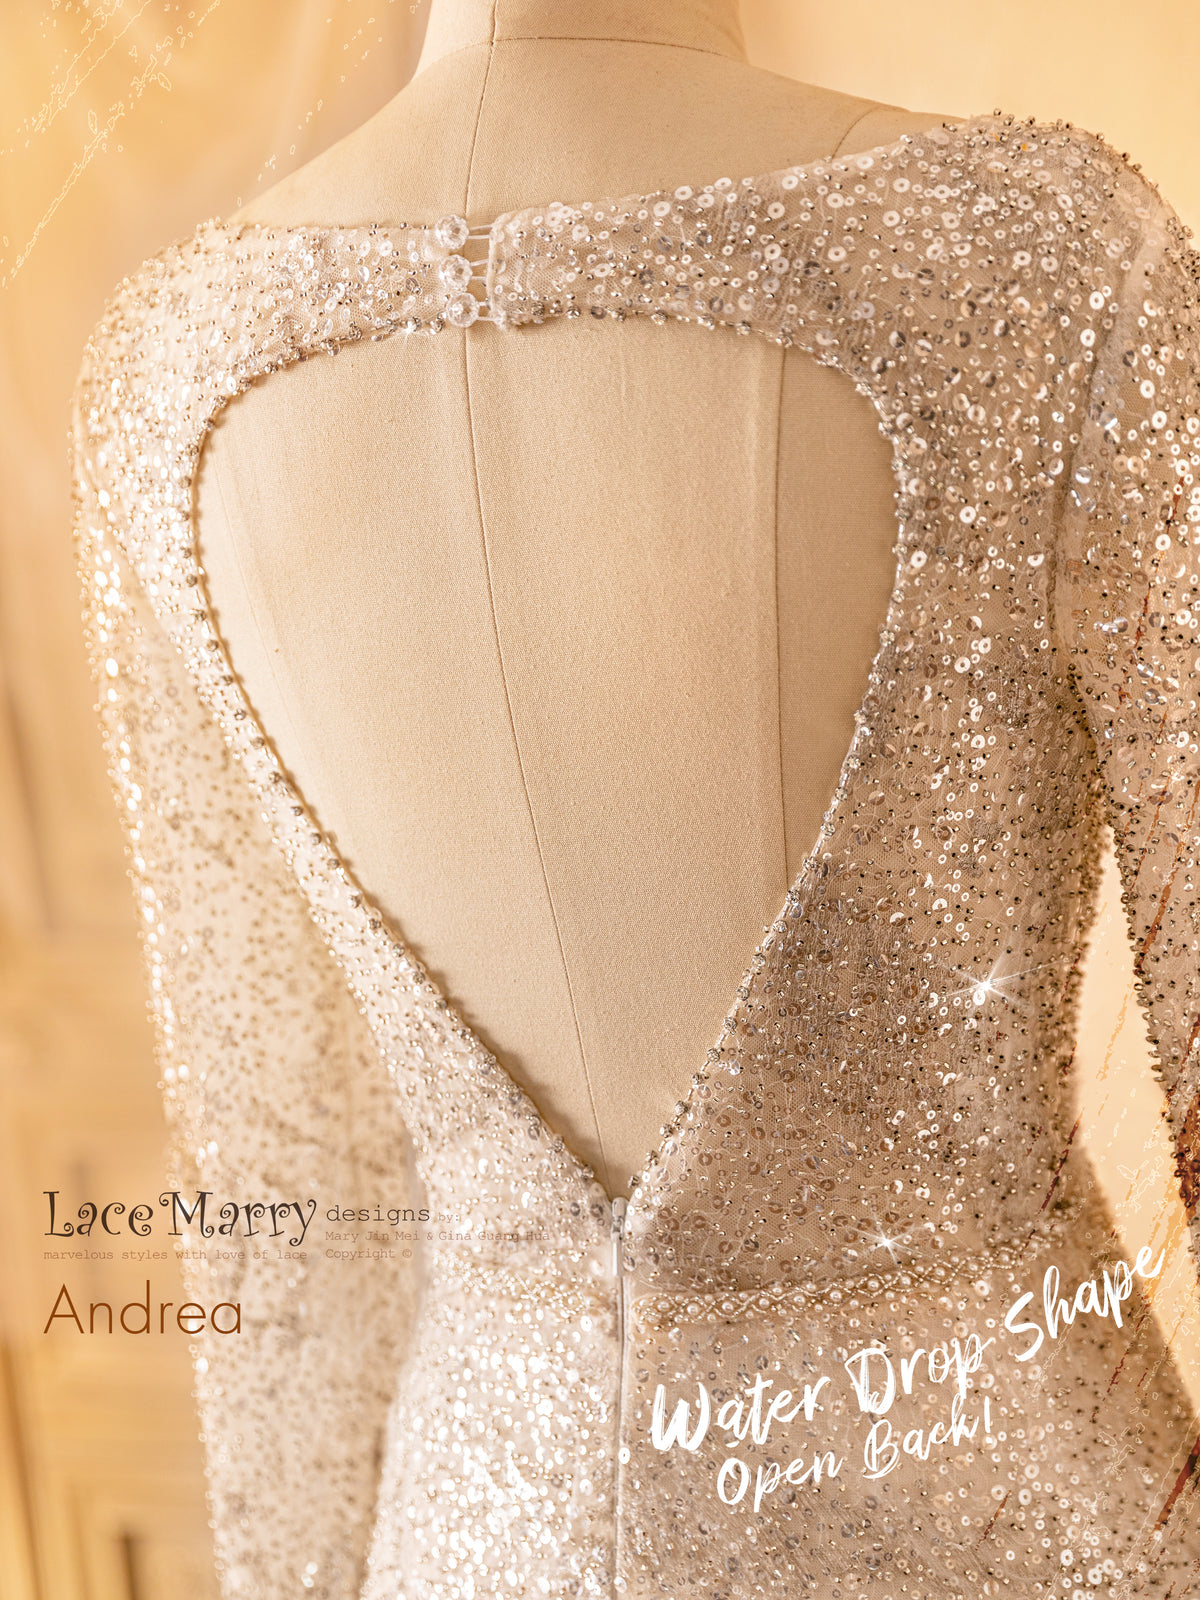 ANDREA / Long Sleeve Sparkling Sequin Wedding Dress